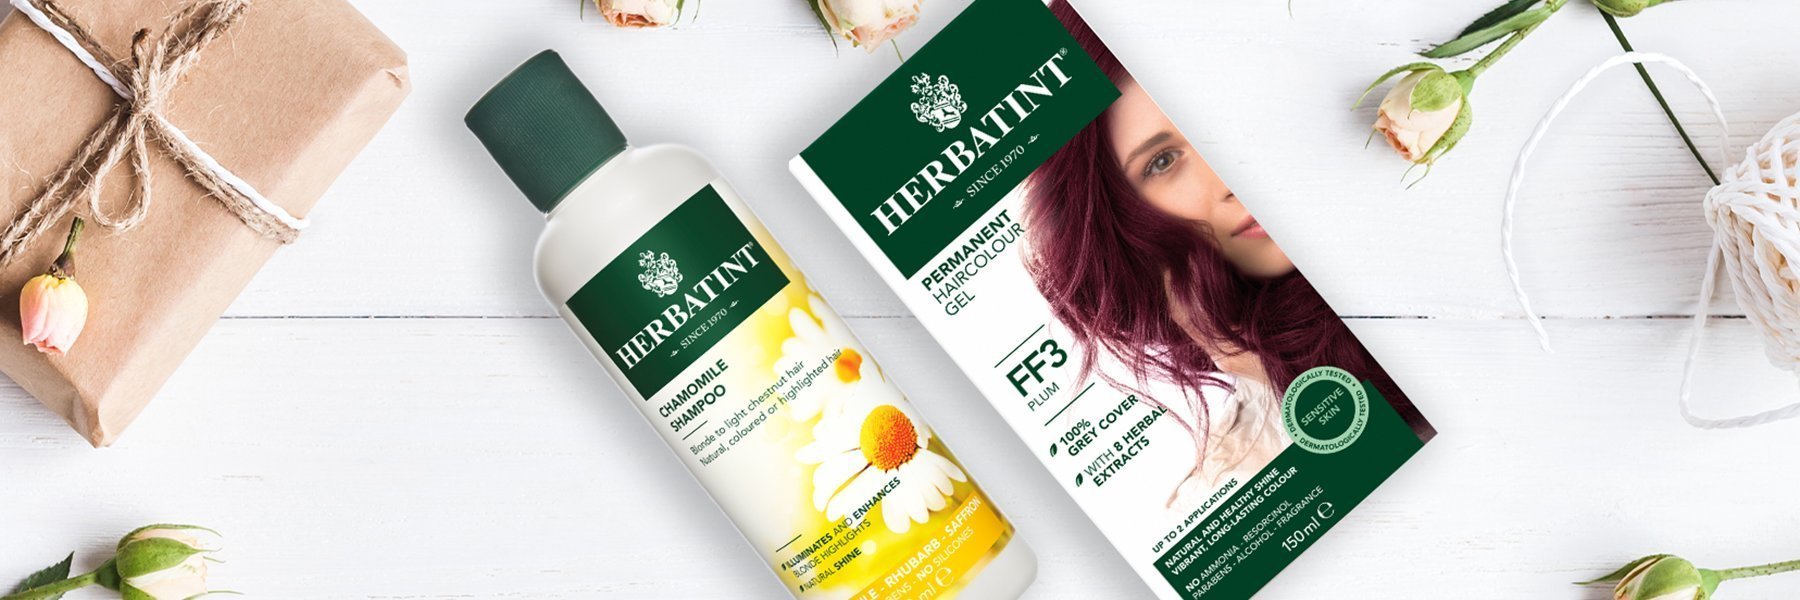 Herbatint Permanent Haircolour Gel - The most Natural Alternative